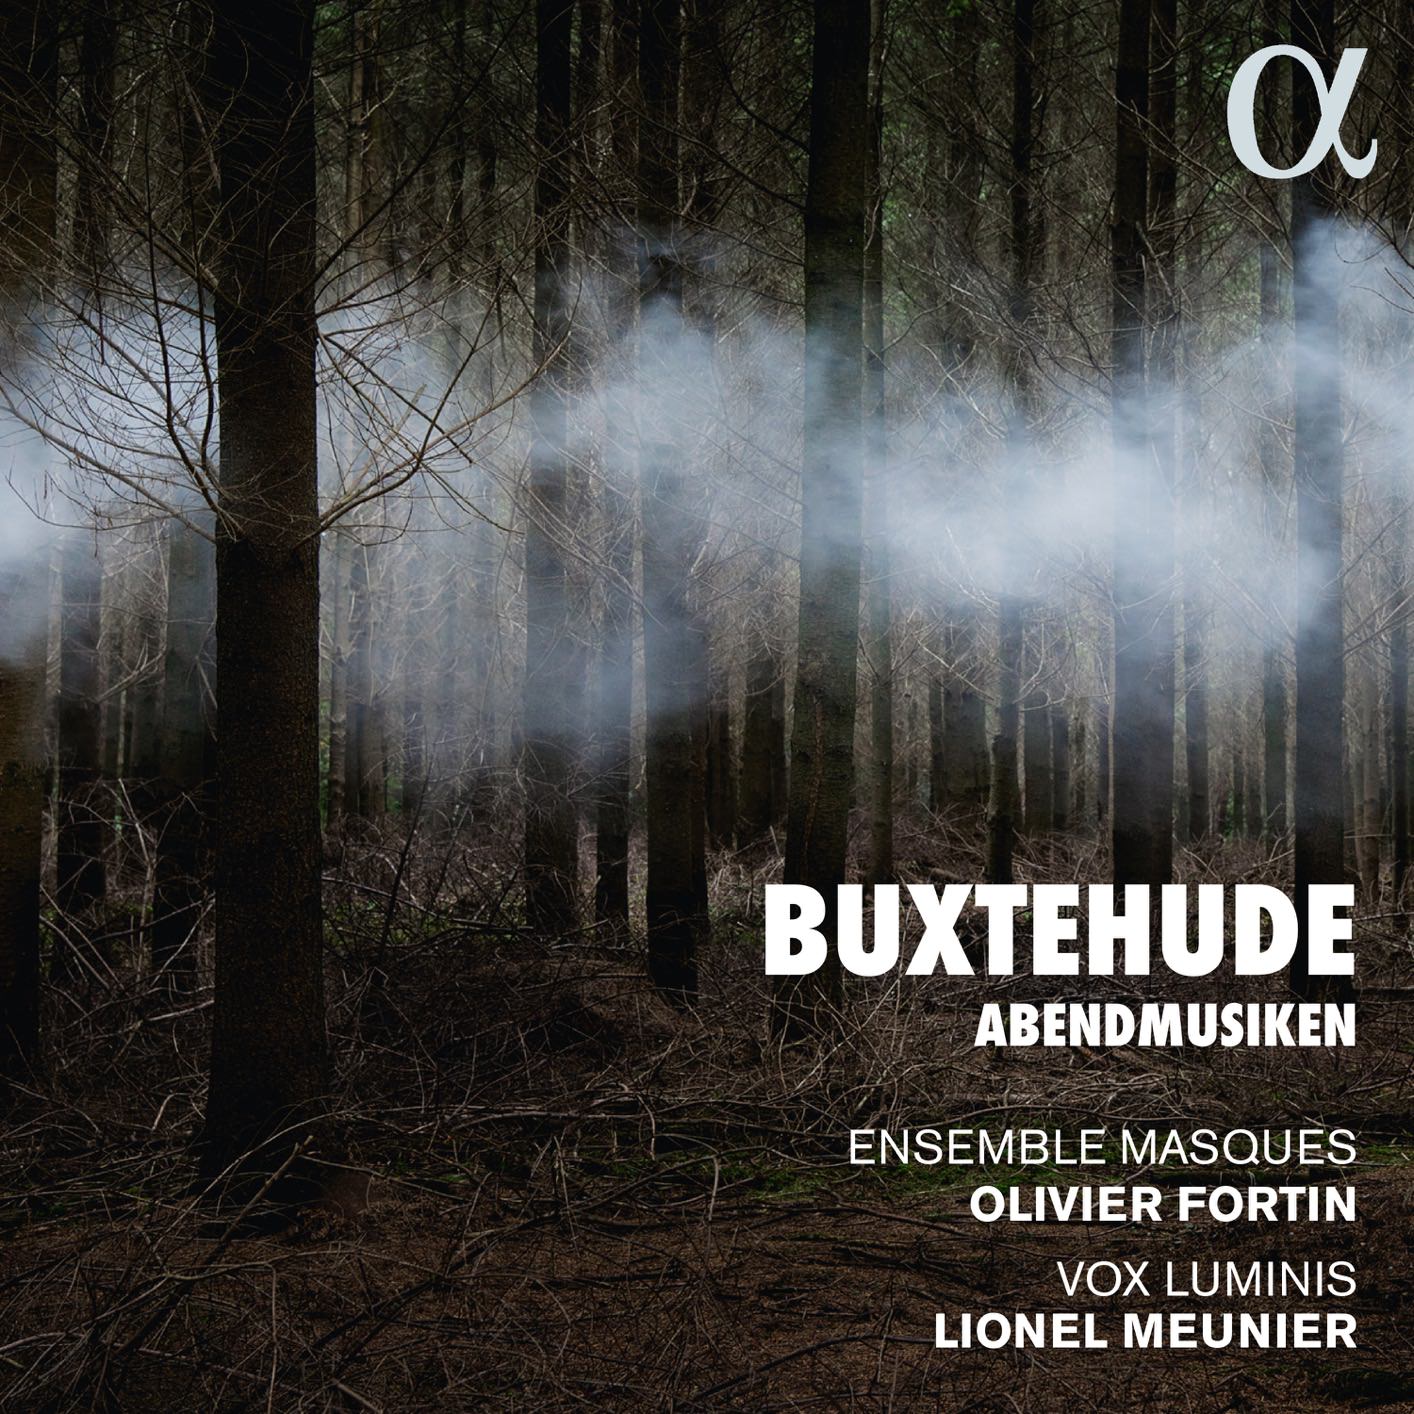 Vox Luminis, Lionel Meunier, Ensemble Masques & Olivier Fortin - Buxtehude: Abendmusiken (2018) [FLAC 24bit/96kHz]